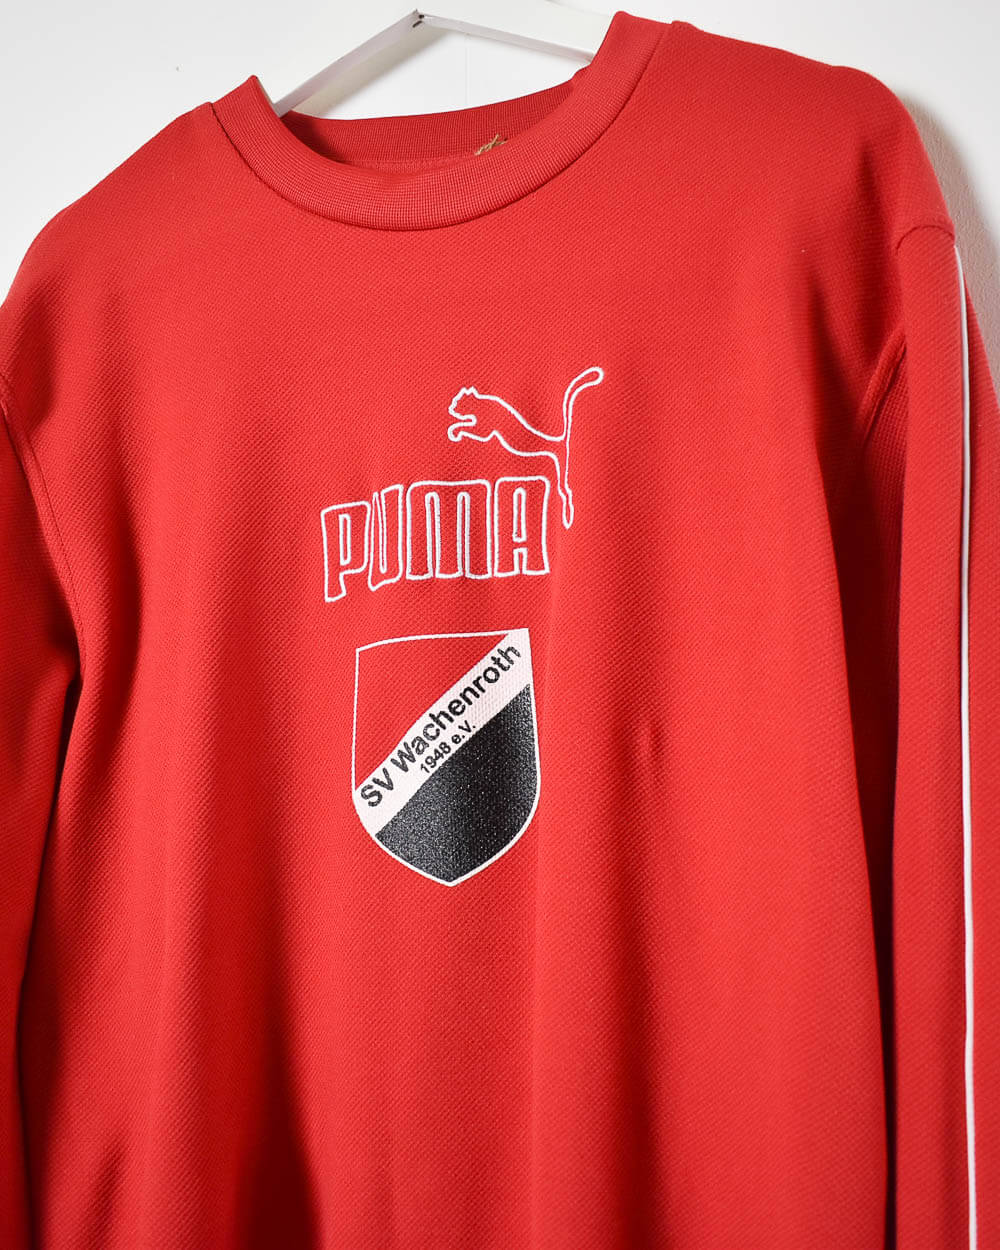 Red Puma SV Wachenroth Sweatshirt - Medium